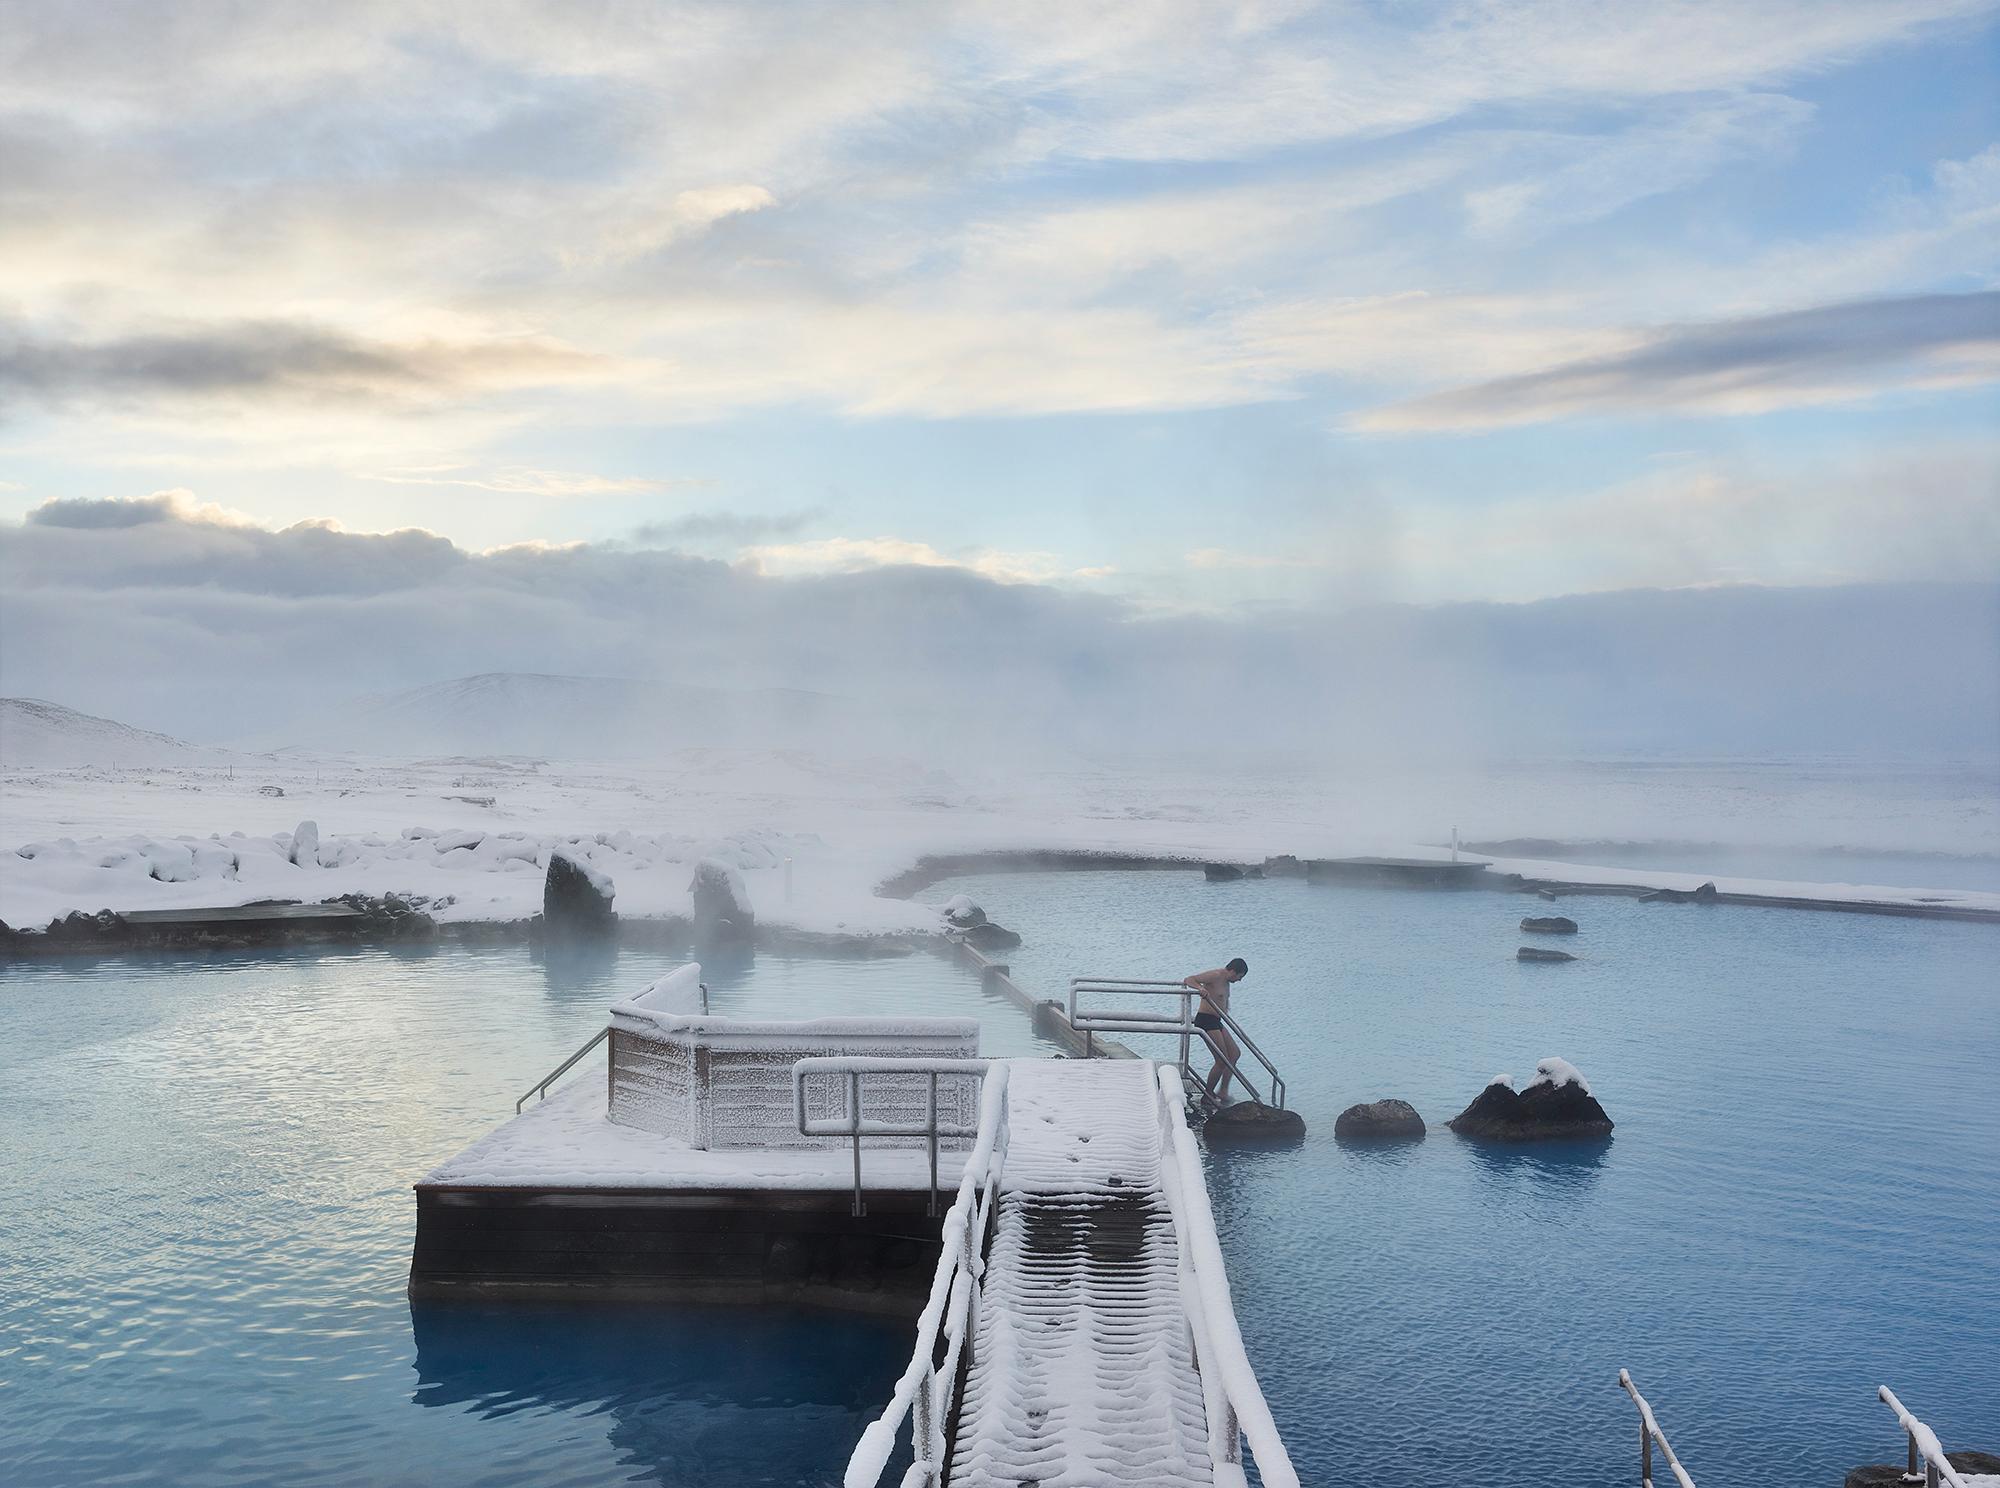 Massimo Vitali Landscape Print - Myvatn Nature Baths (framed) - large scale photograph of Iceland hot springs